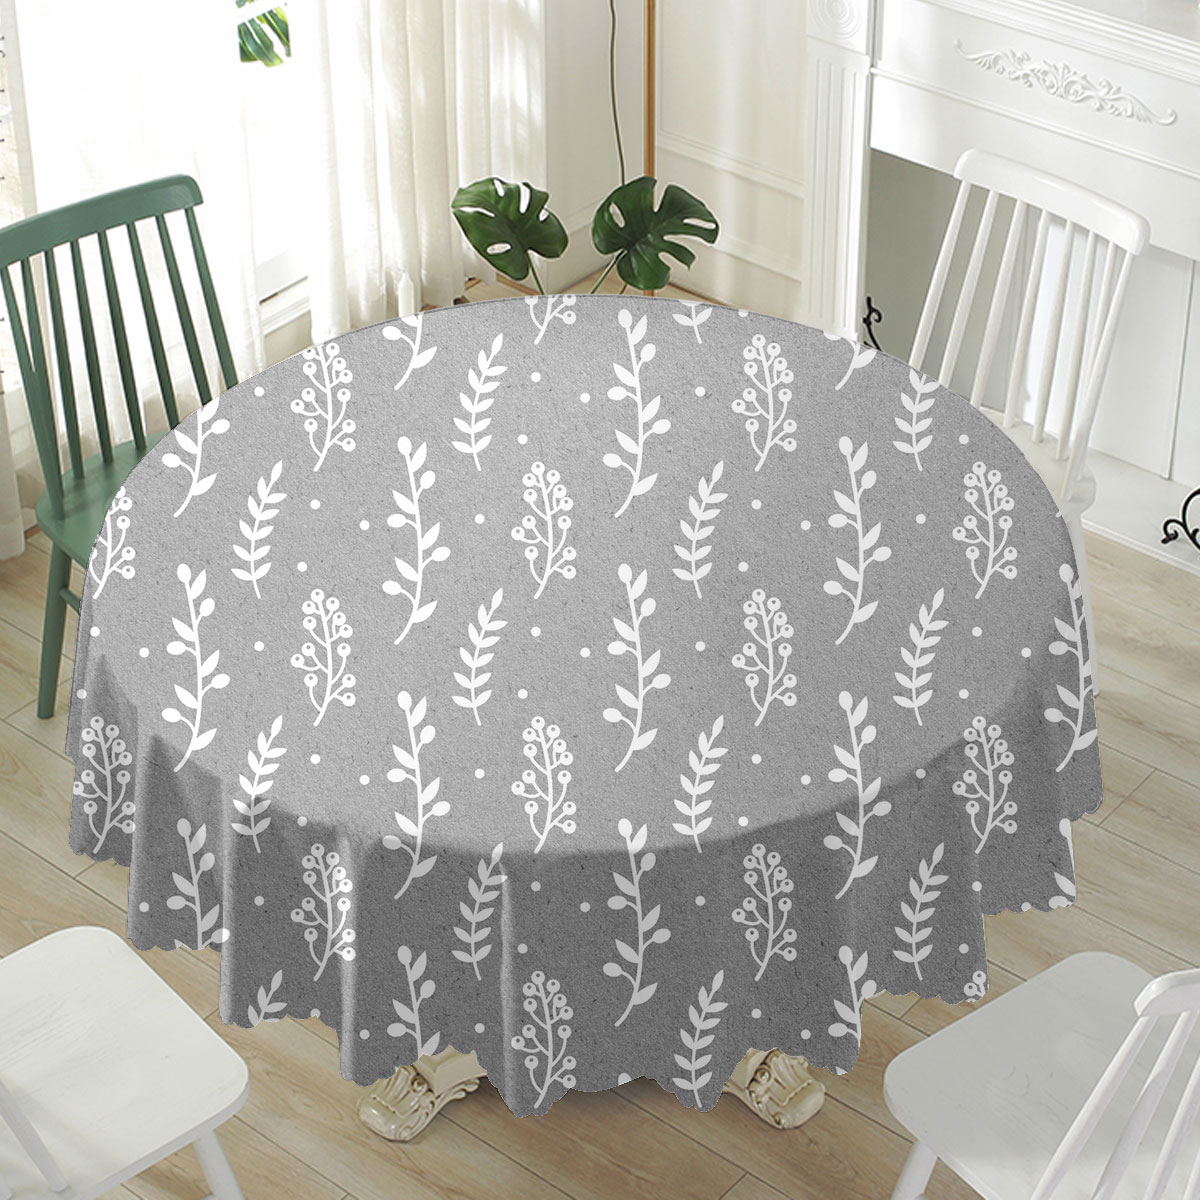 Christmas Mistletoe And Leaf, Mistletoe Clipart On Grey Waterproof Tablecloth